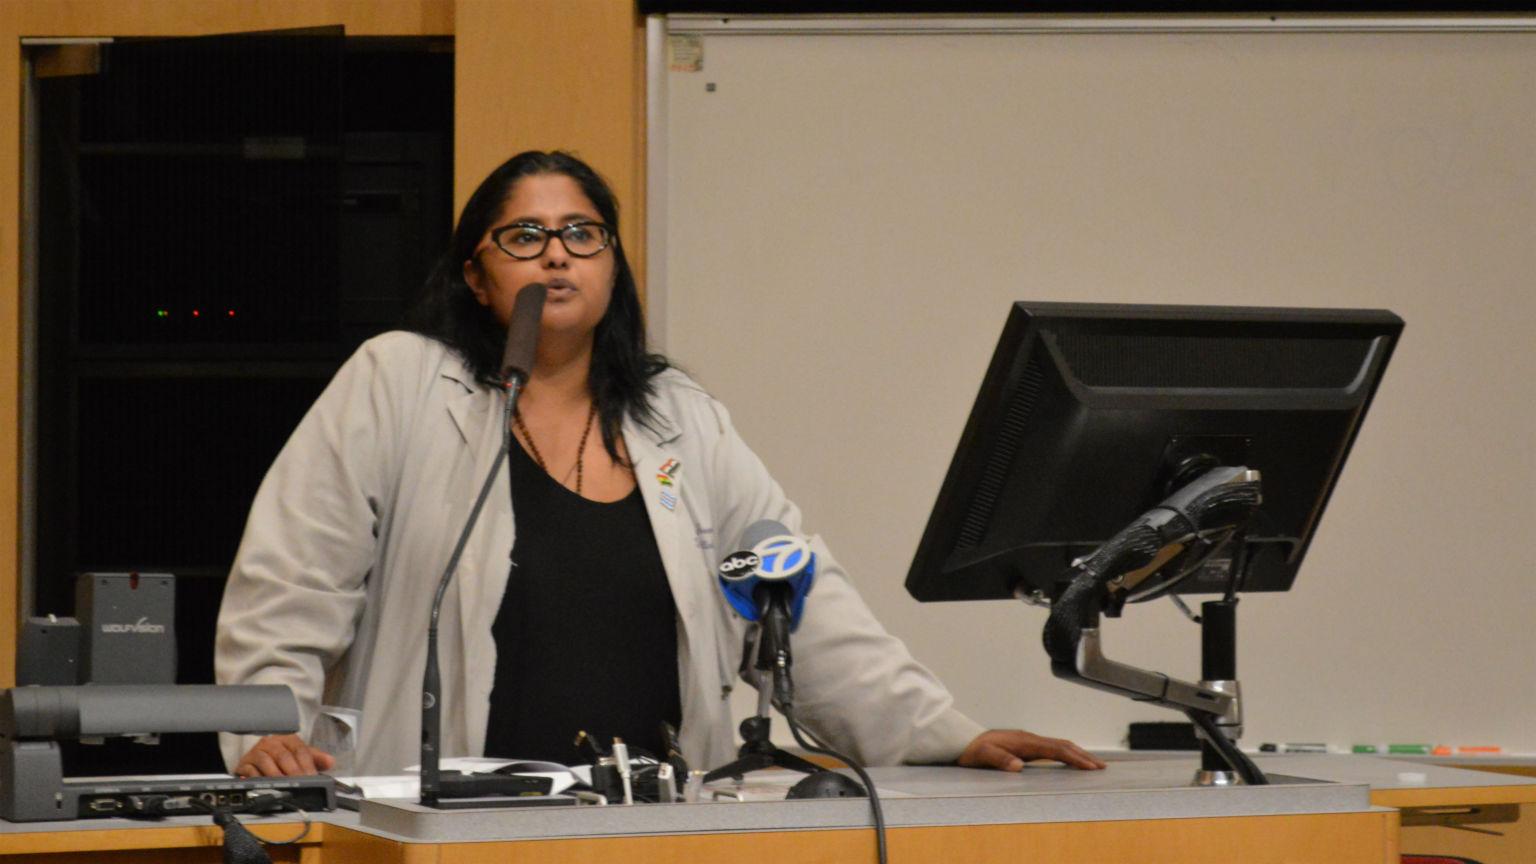 Dr. Mamta Swaroop talks Monday, Sept. 17, 2018 about her work teaching community members how to treat gunshot victims. (Kristen Thometz / Chicago Tonight)